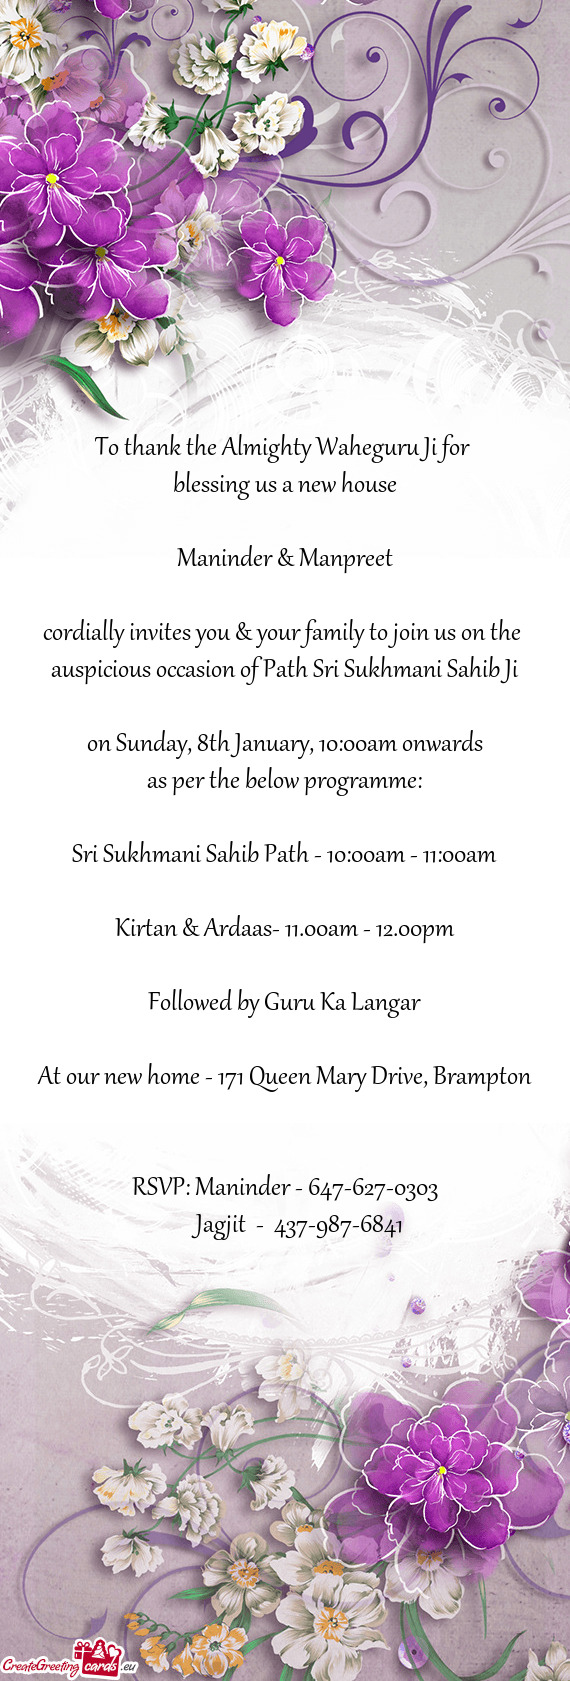 Auspicious occasion of Path Sri Sukhmani Sahib Ji